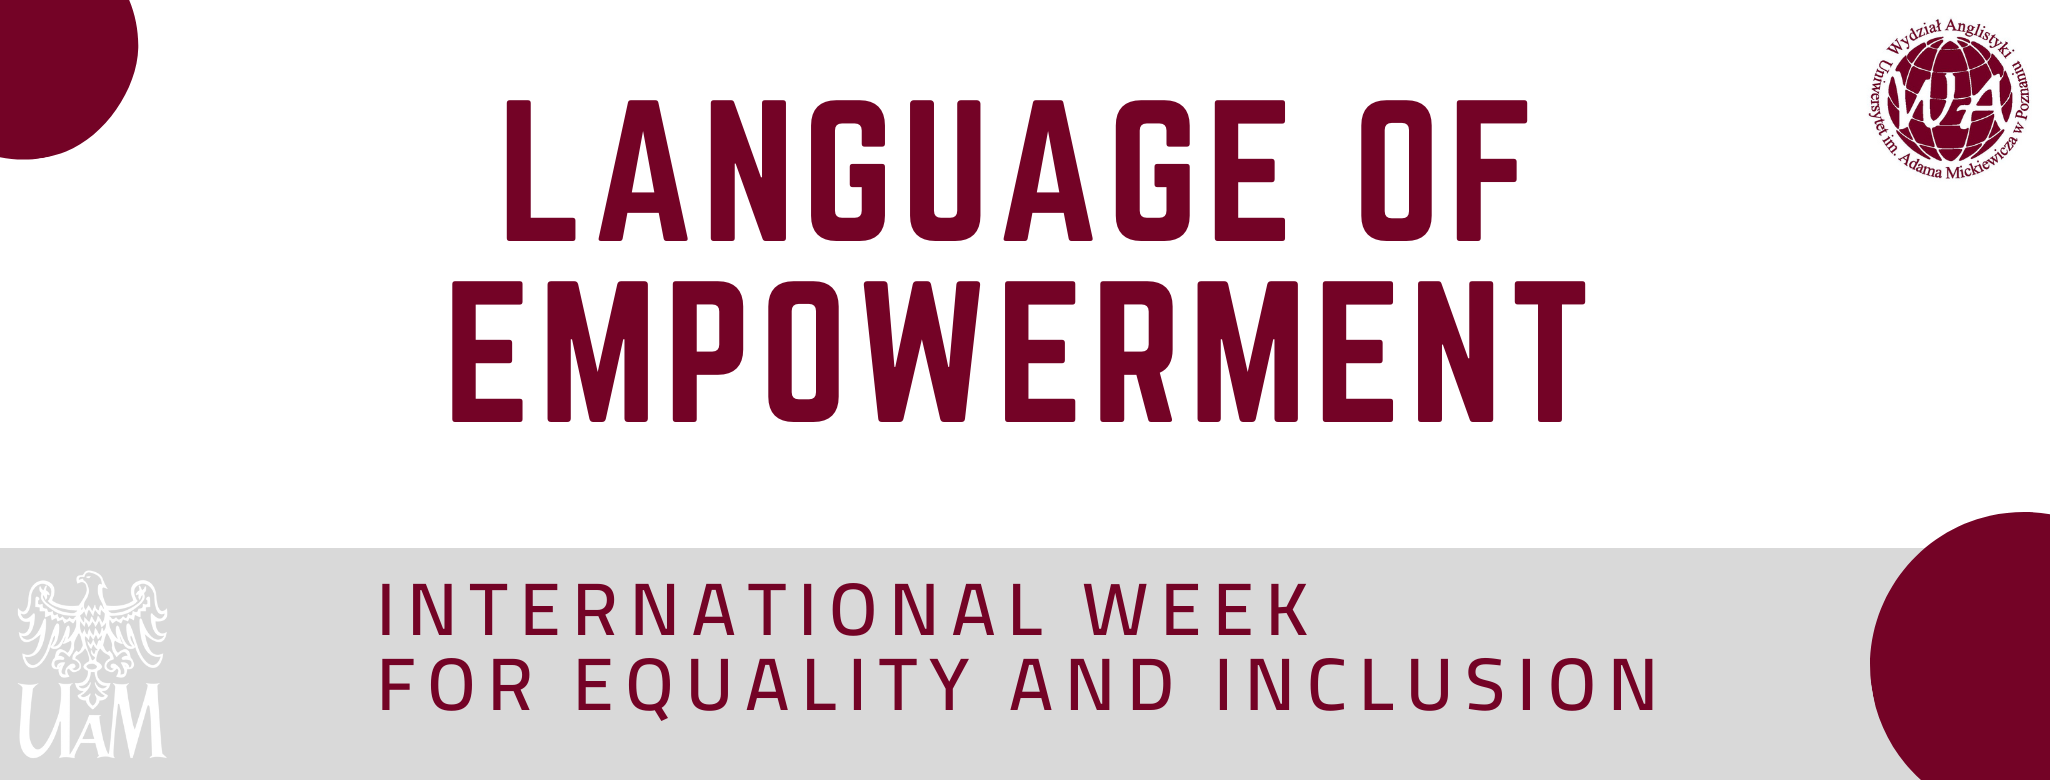 Language of Empowerment: Logo and slogan